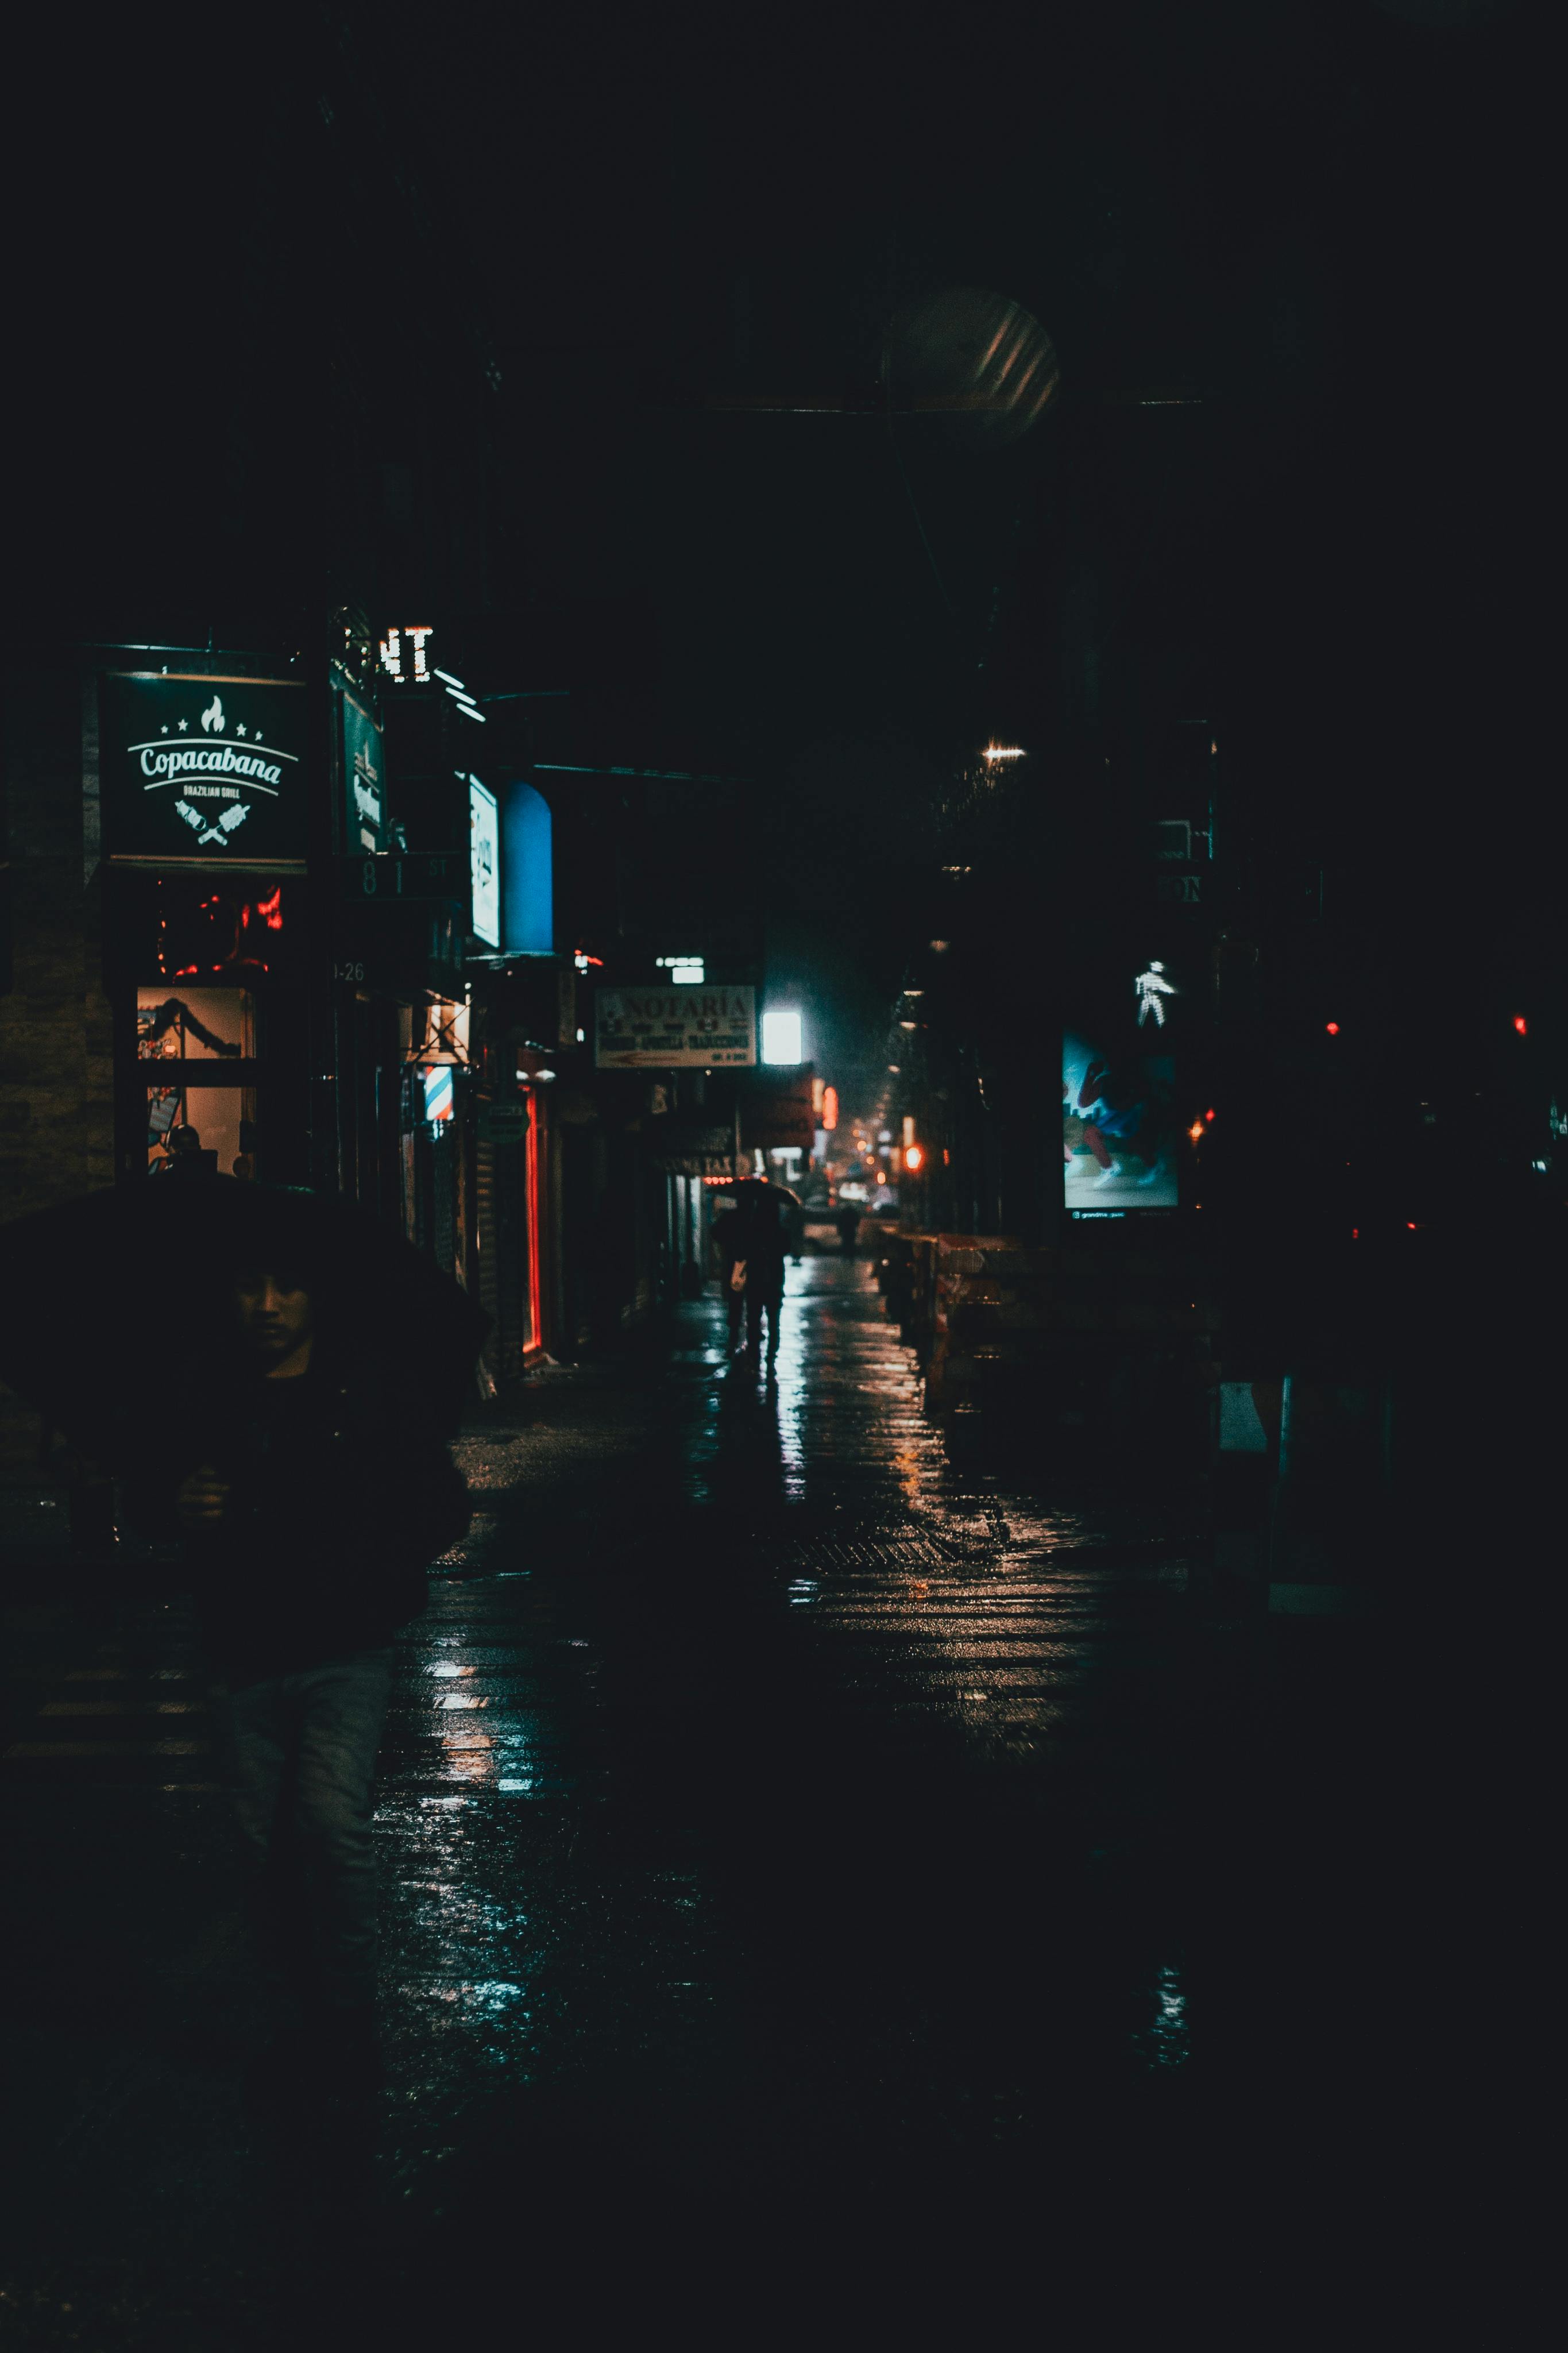 People Walking on Street during Night Time · Free Stock Photo